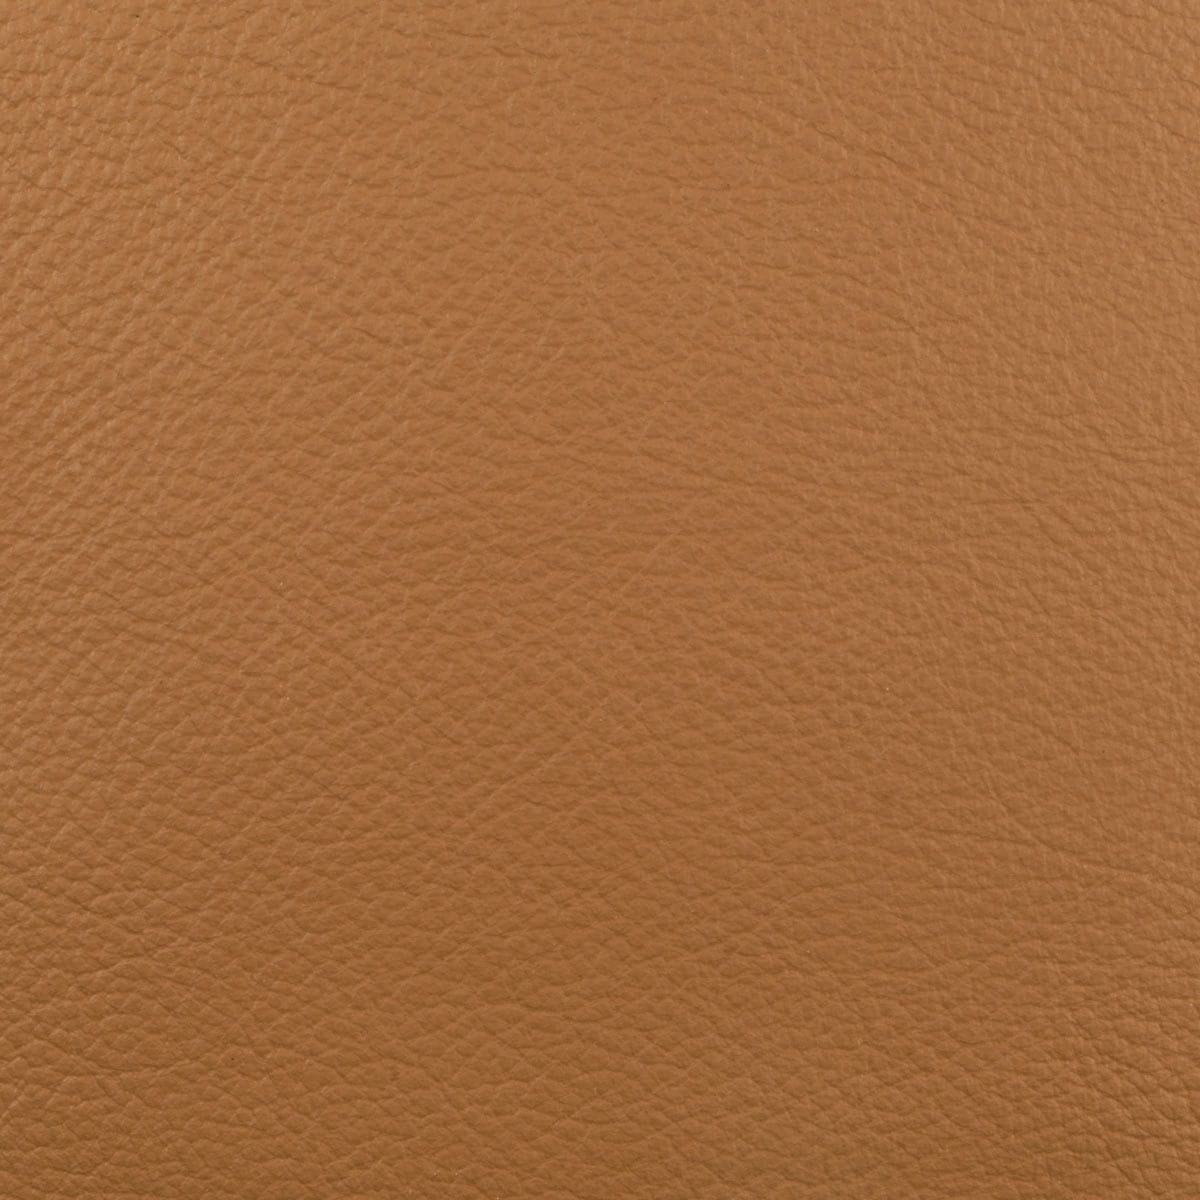 Jamie Protected Barcelona Leather Design Top - Stern Grain